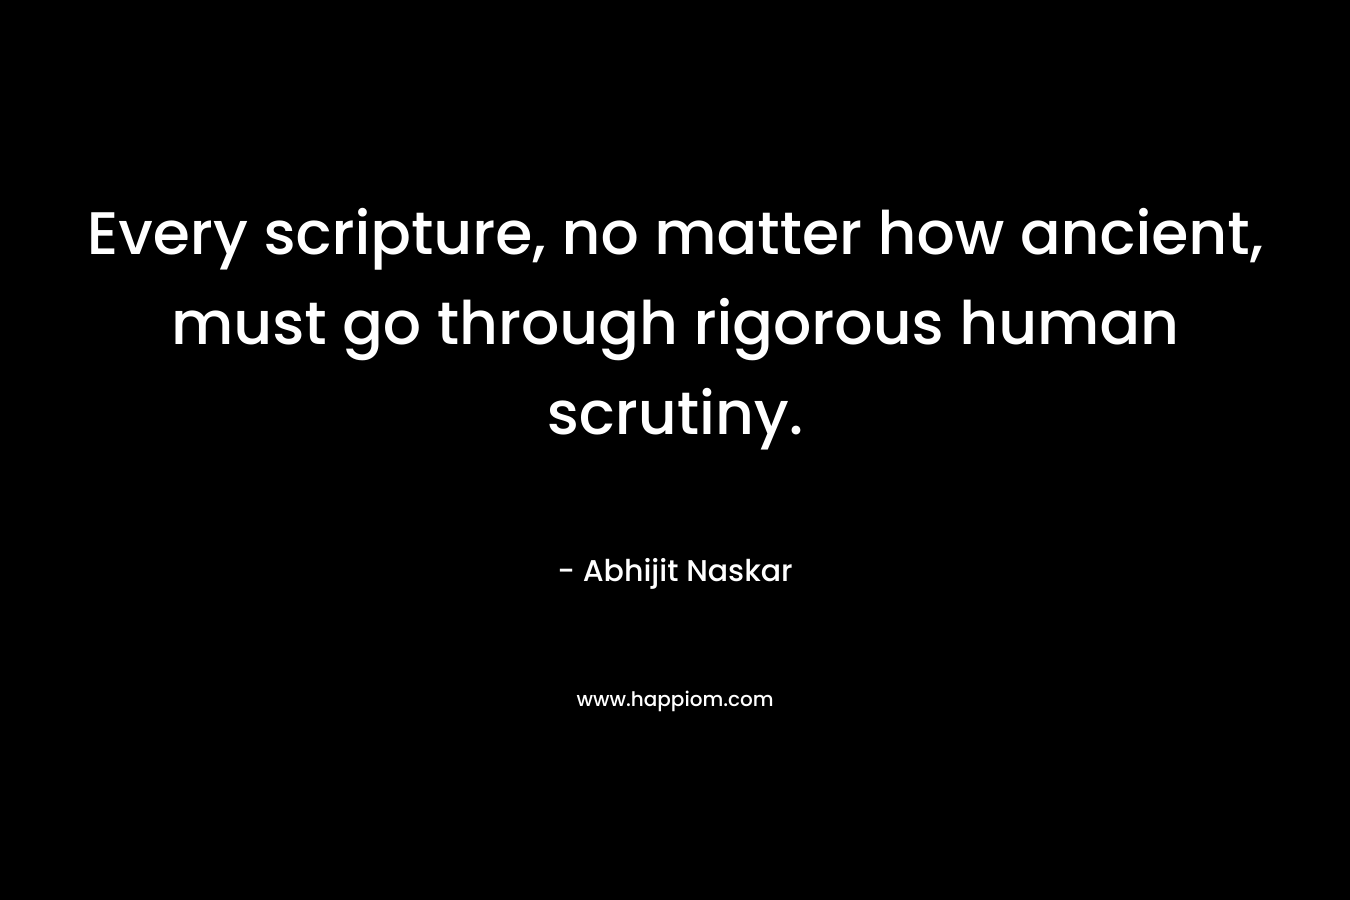 Every scripture, no matter how ancient, must go through rigorous human scrutiny. – Abhijit Naskar